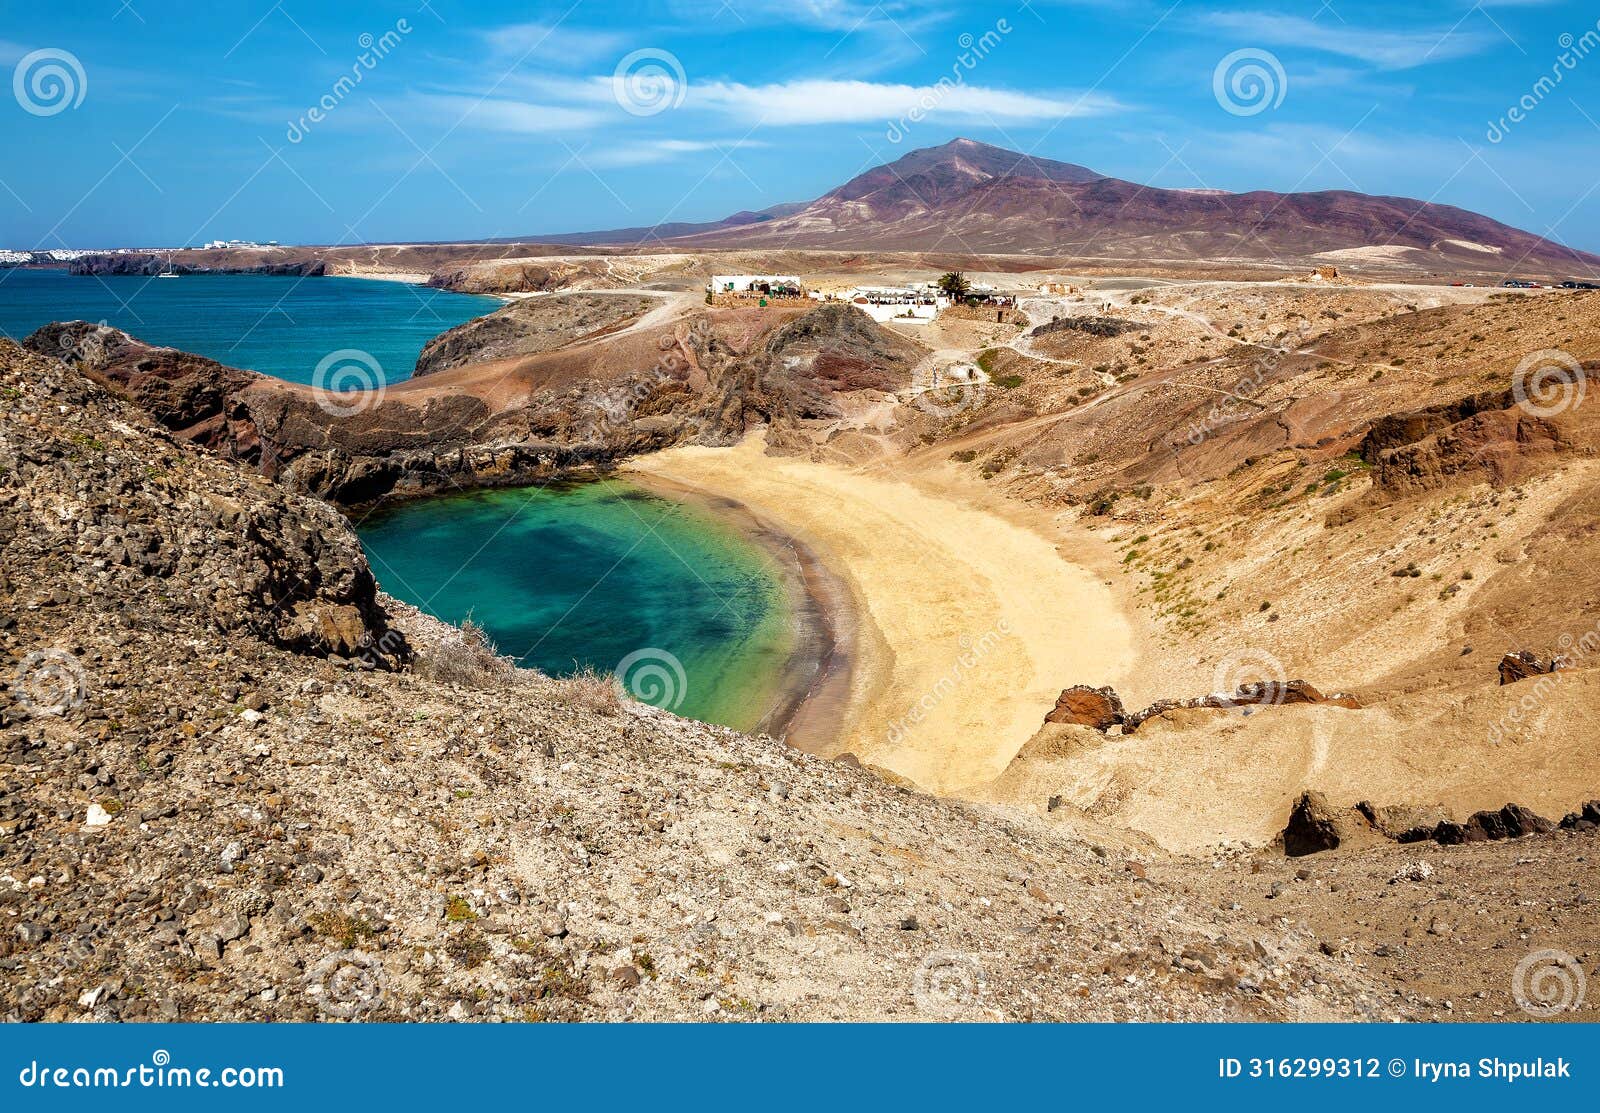 papagayo beach, island lanzarote, canary islands, spain, europe